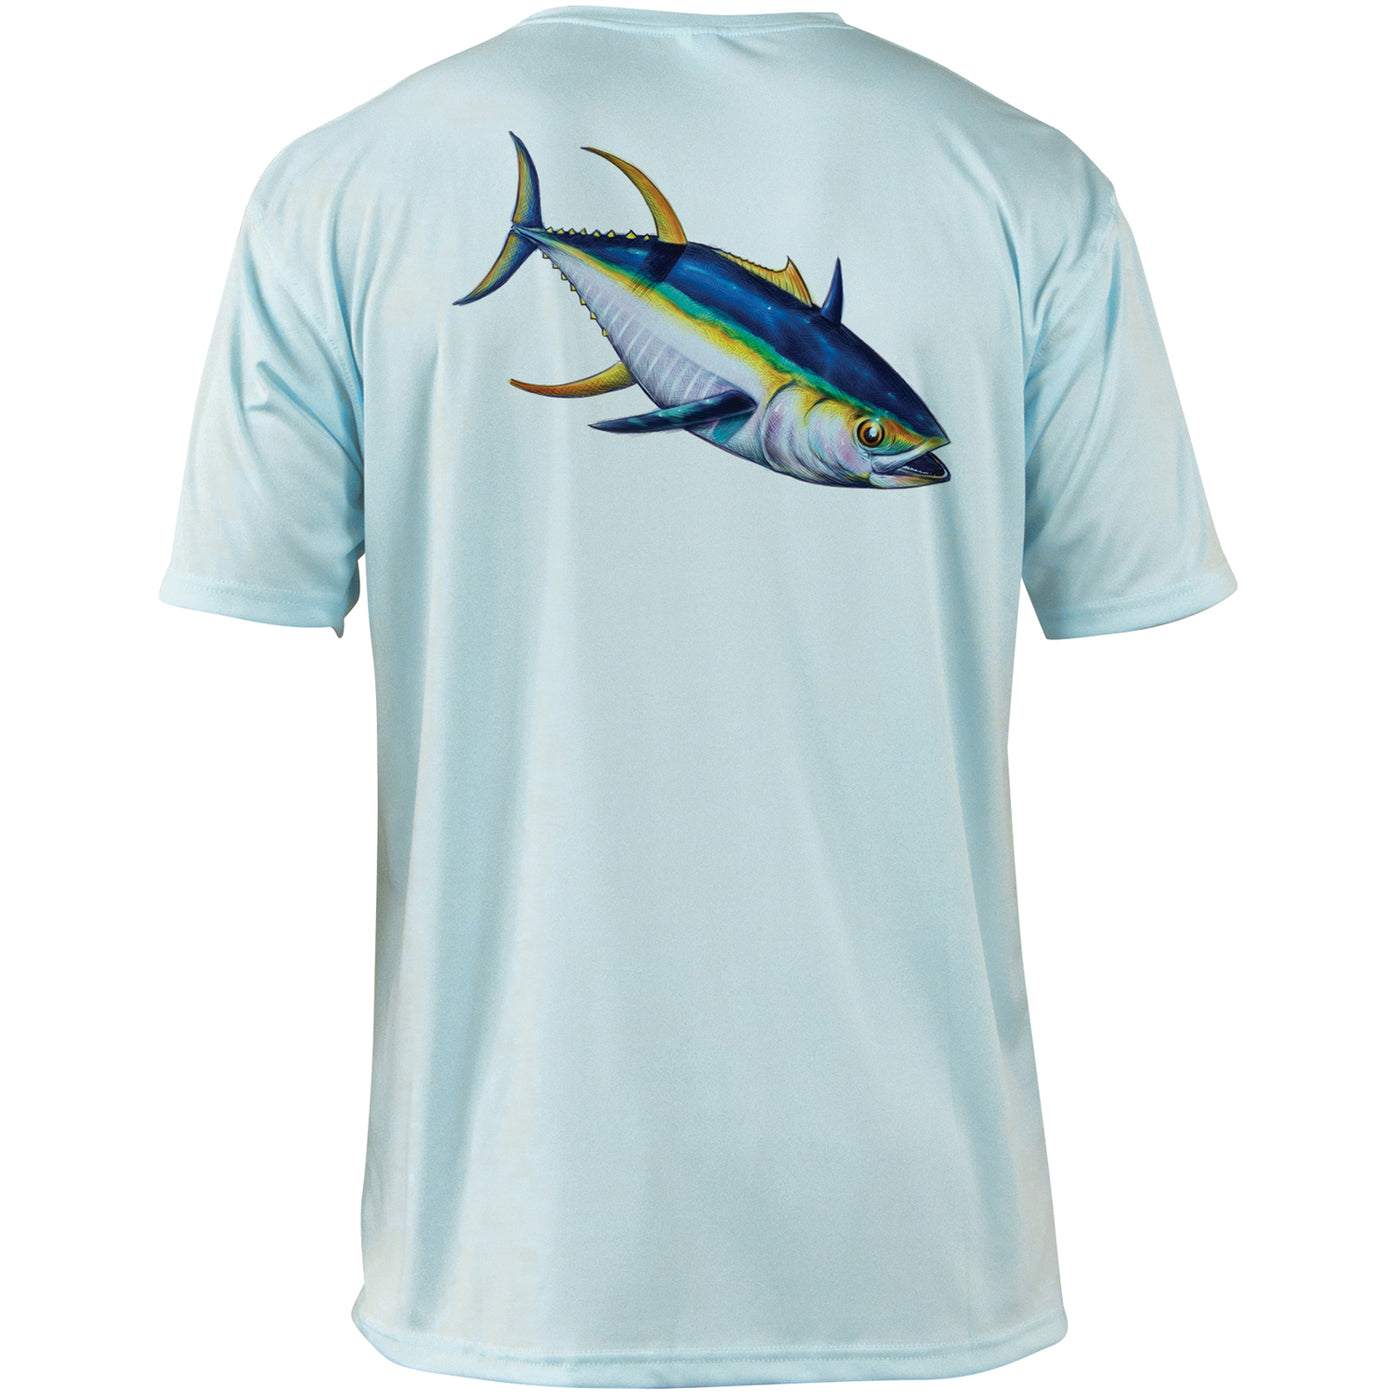  Mossy Oak Elements Long Sleeve Moisture Wicking Fishing Shirt,  Bonefish/Cool Grey, Medium : Sports & Outdoors